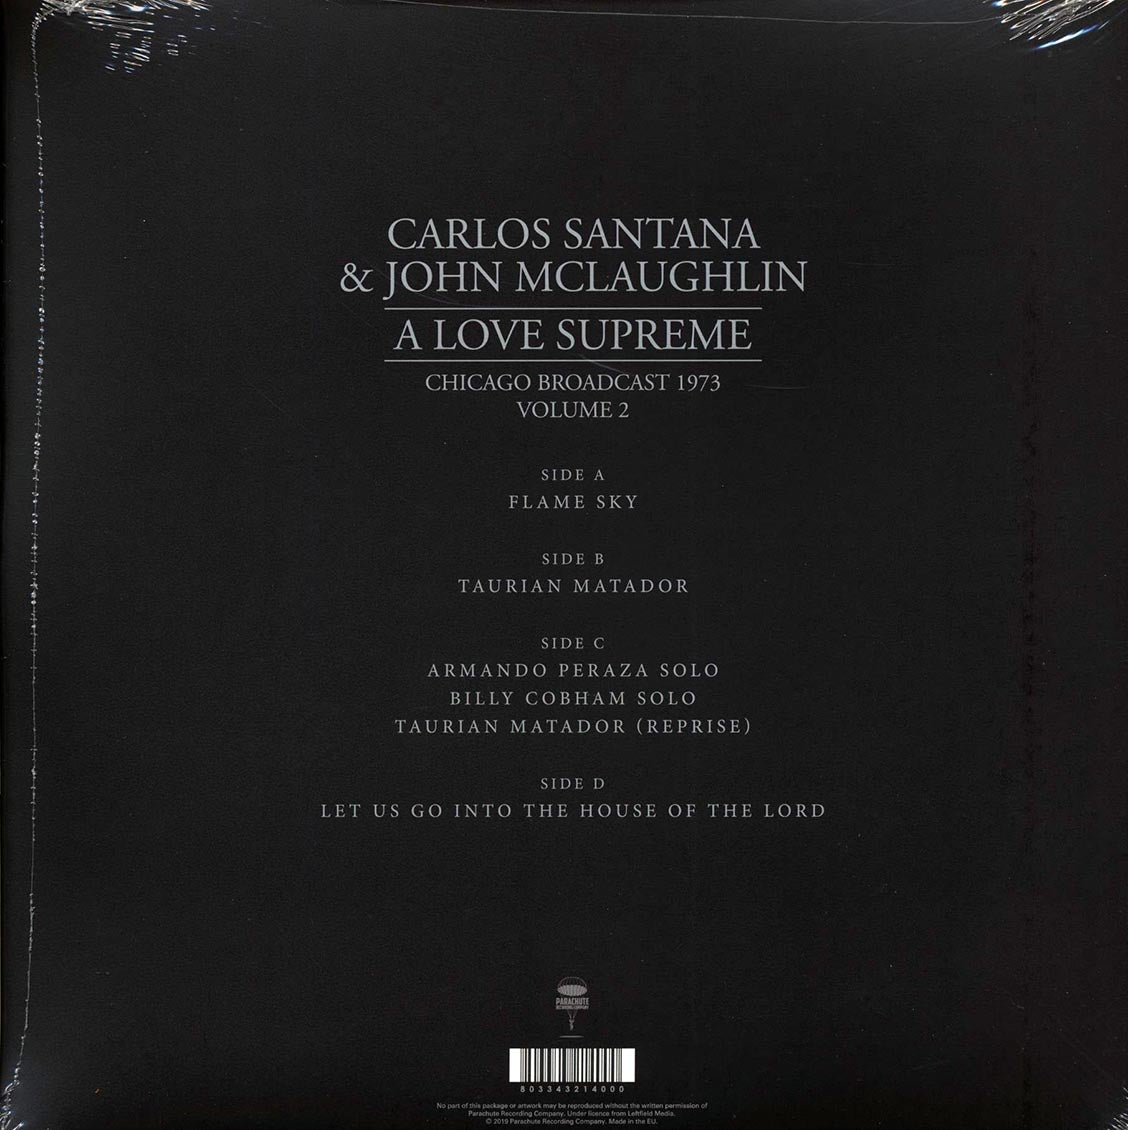 Carlos Santana, John McLaughlin - A Love Supreme Volume 2: Chicago Broadcast 1973 (2xLP) - Vinyl LP, LP